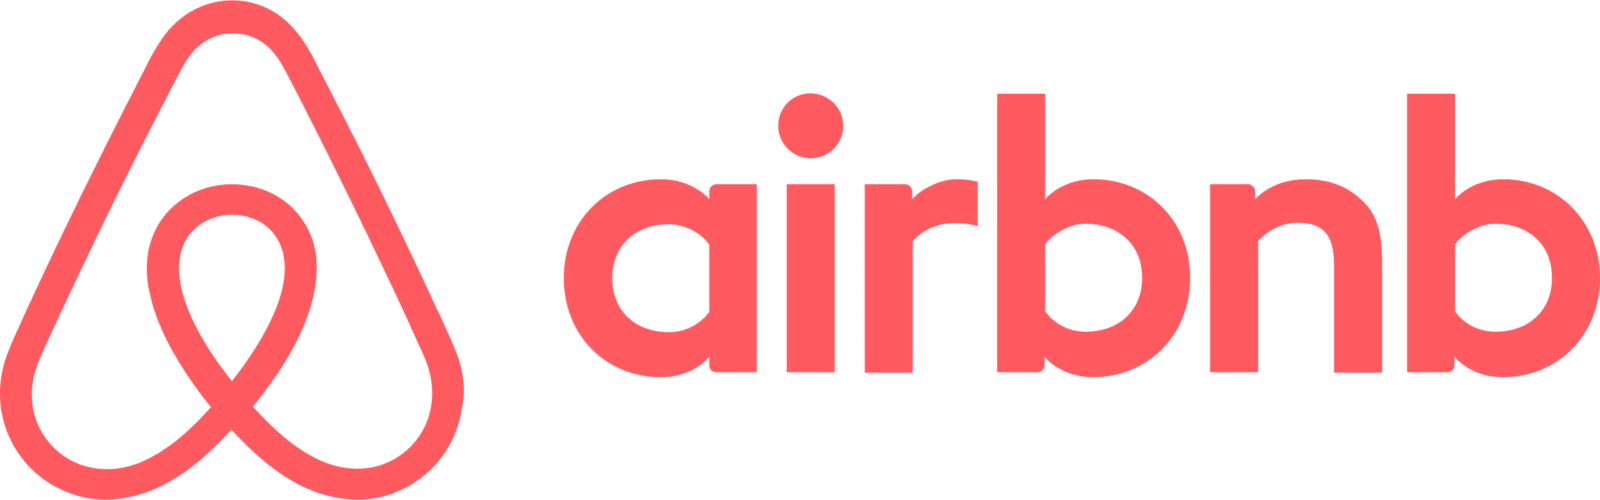 Airbnb_Logo_Bélo.svg